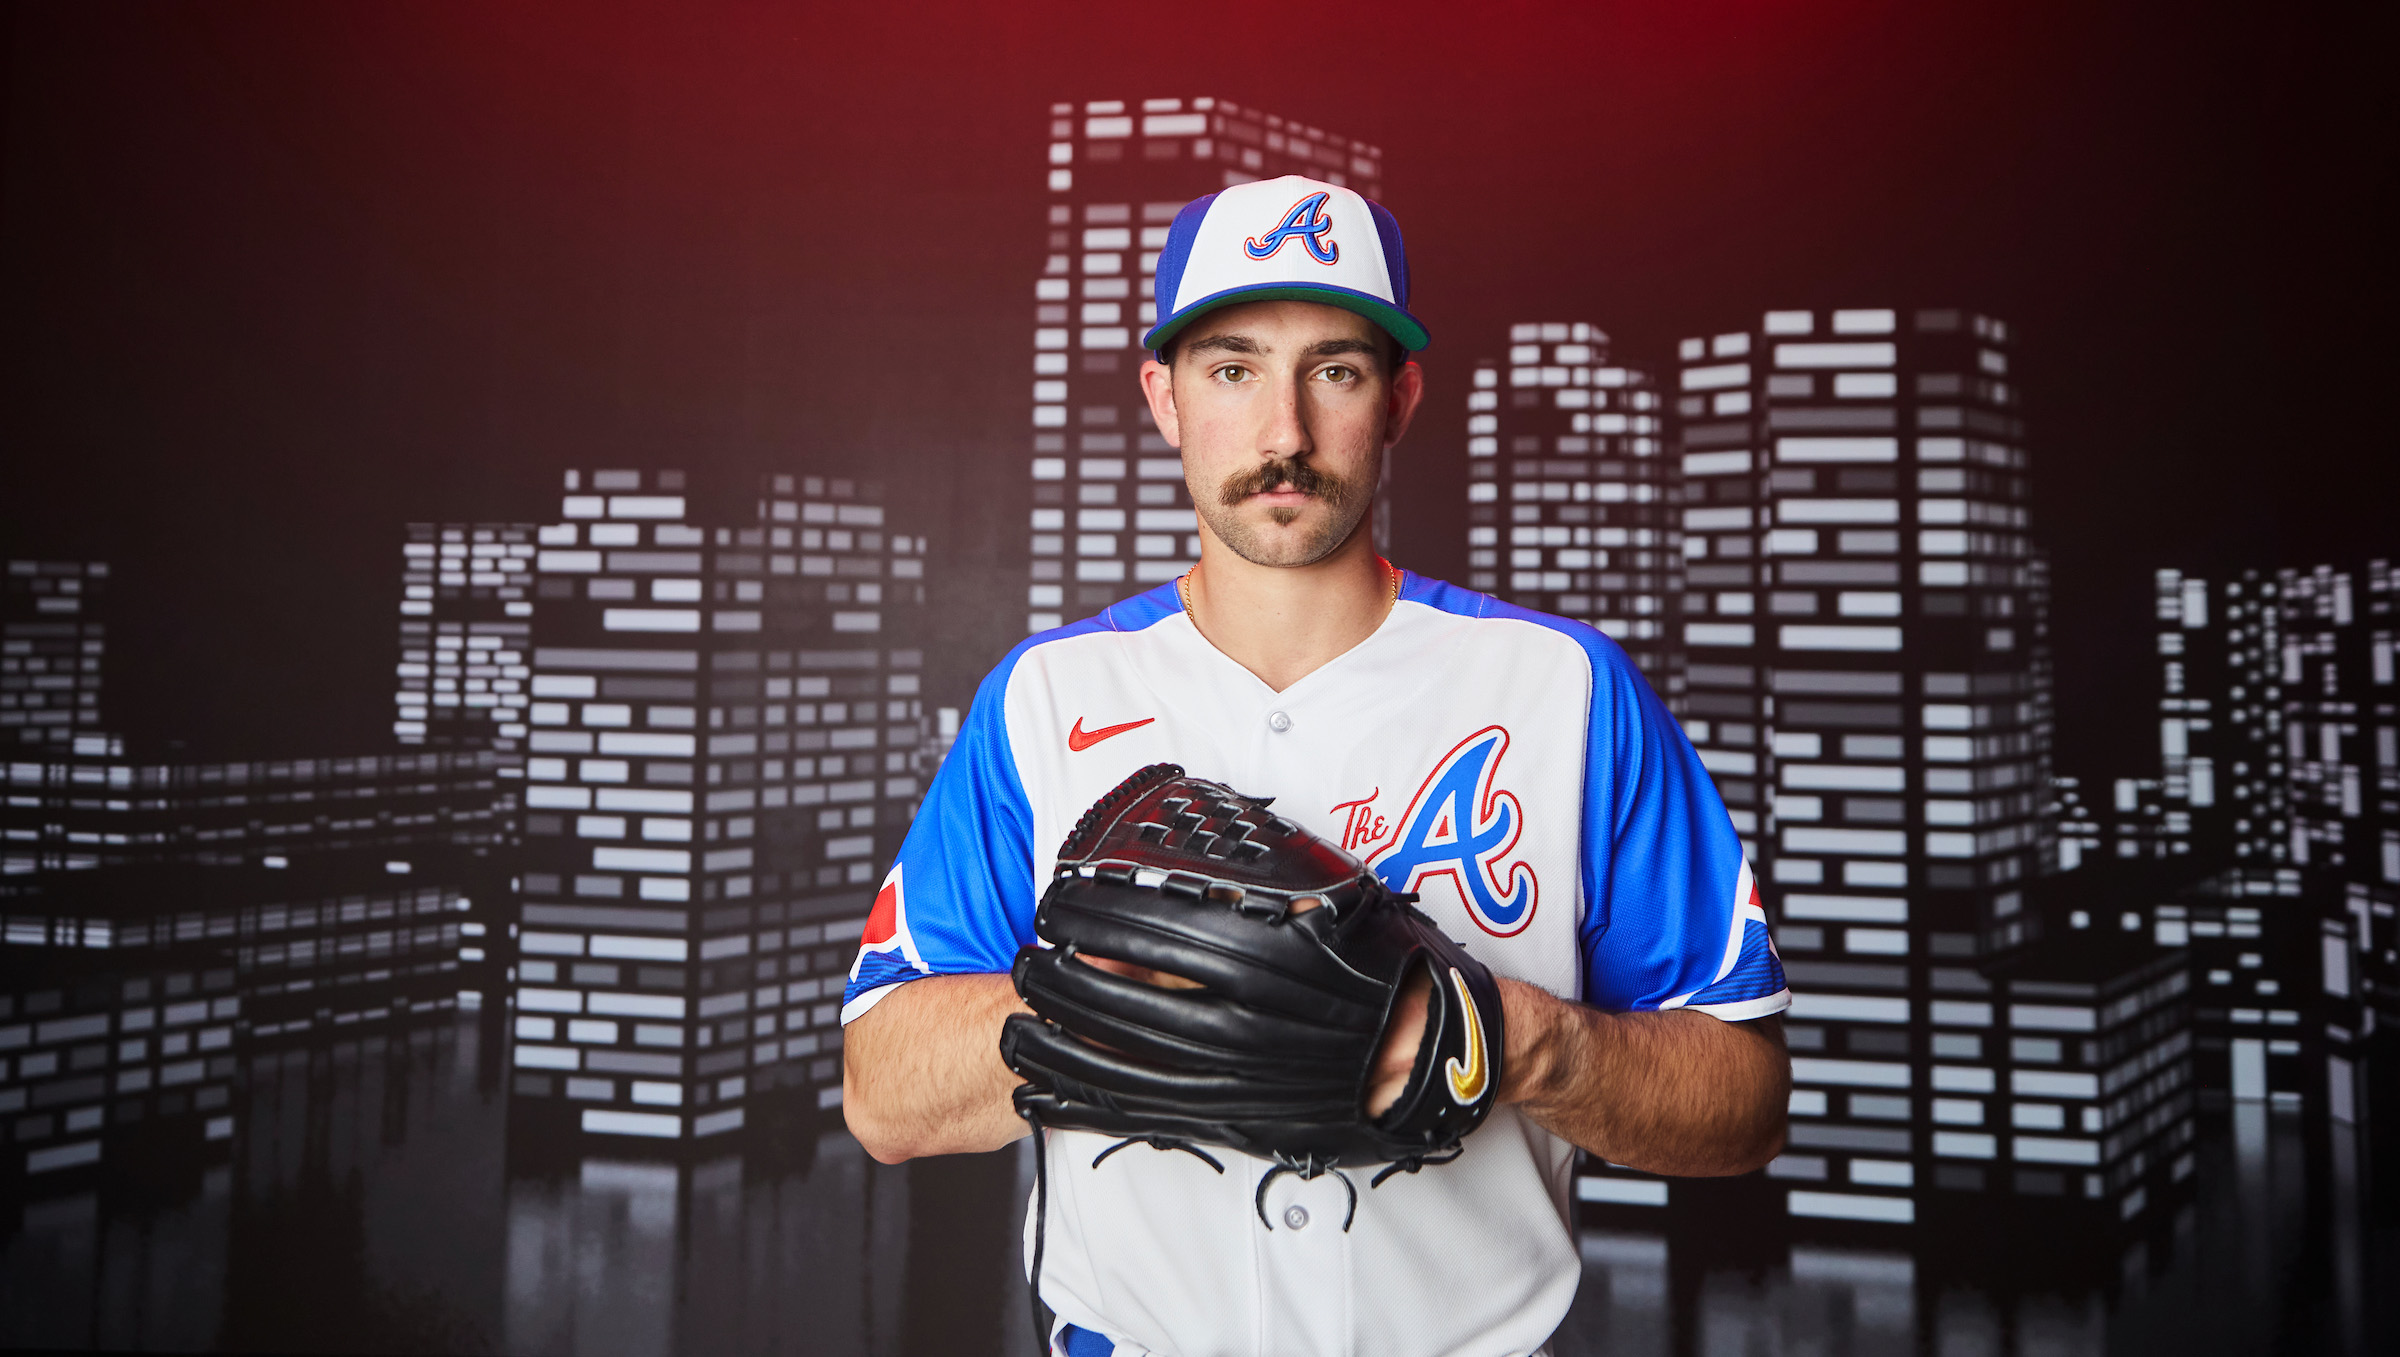 Atlanta Braves Unveil New City Connect Uniforms Honoring The Late Great  MLBbro Hank Aaron